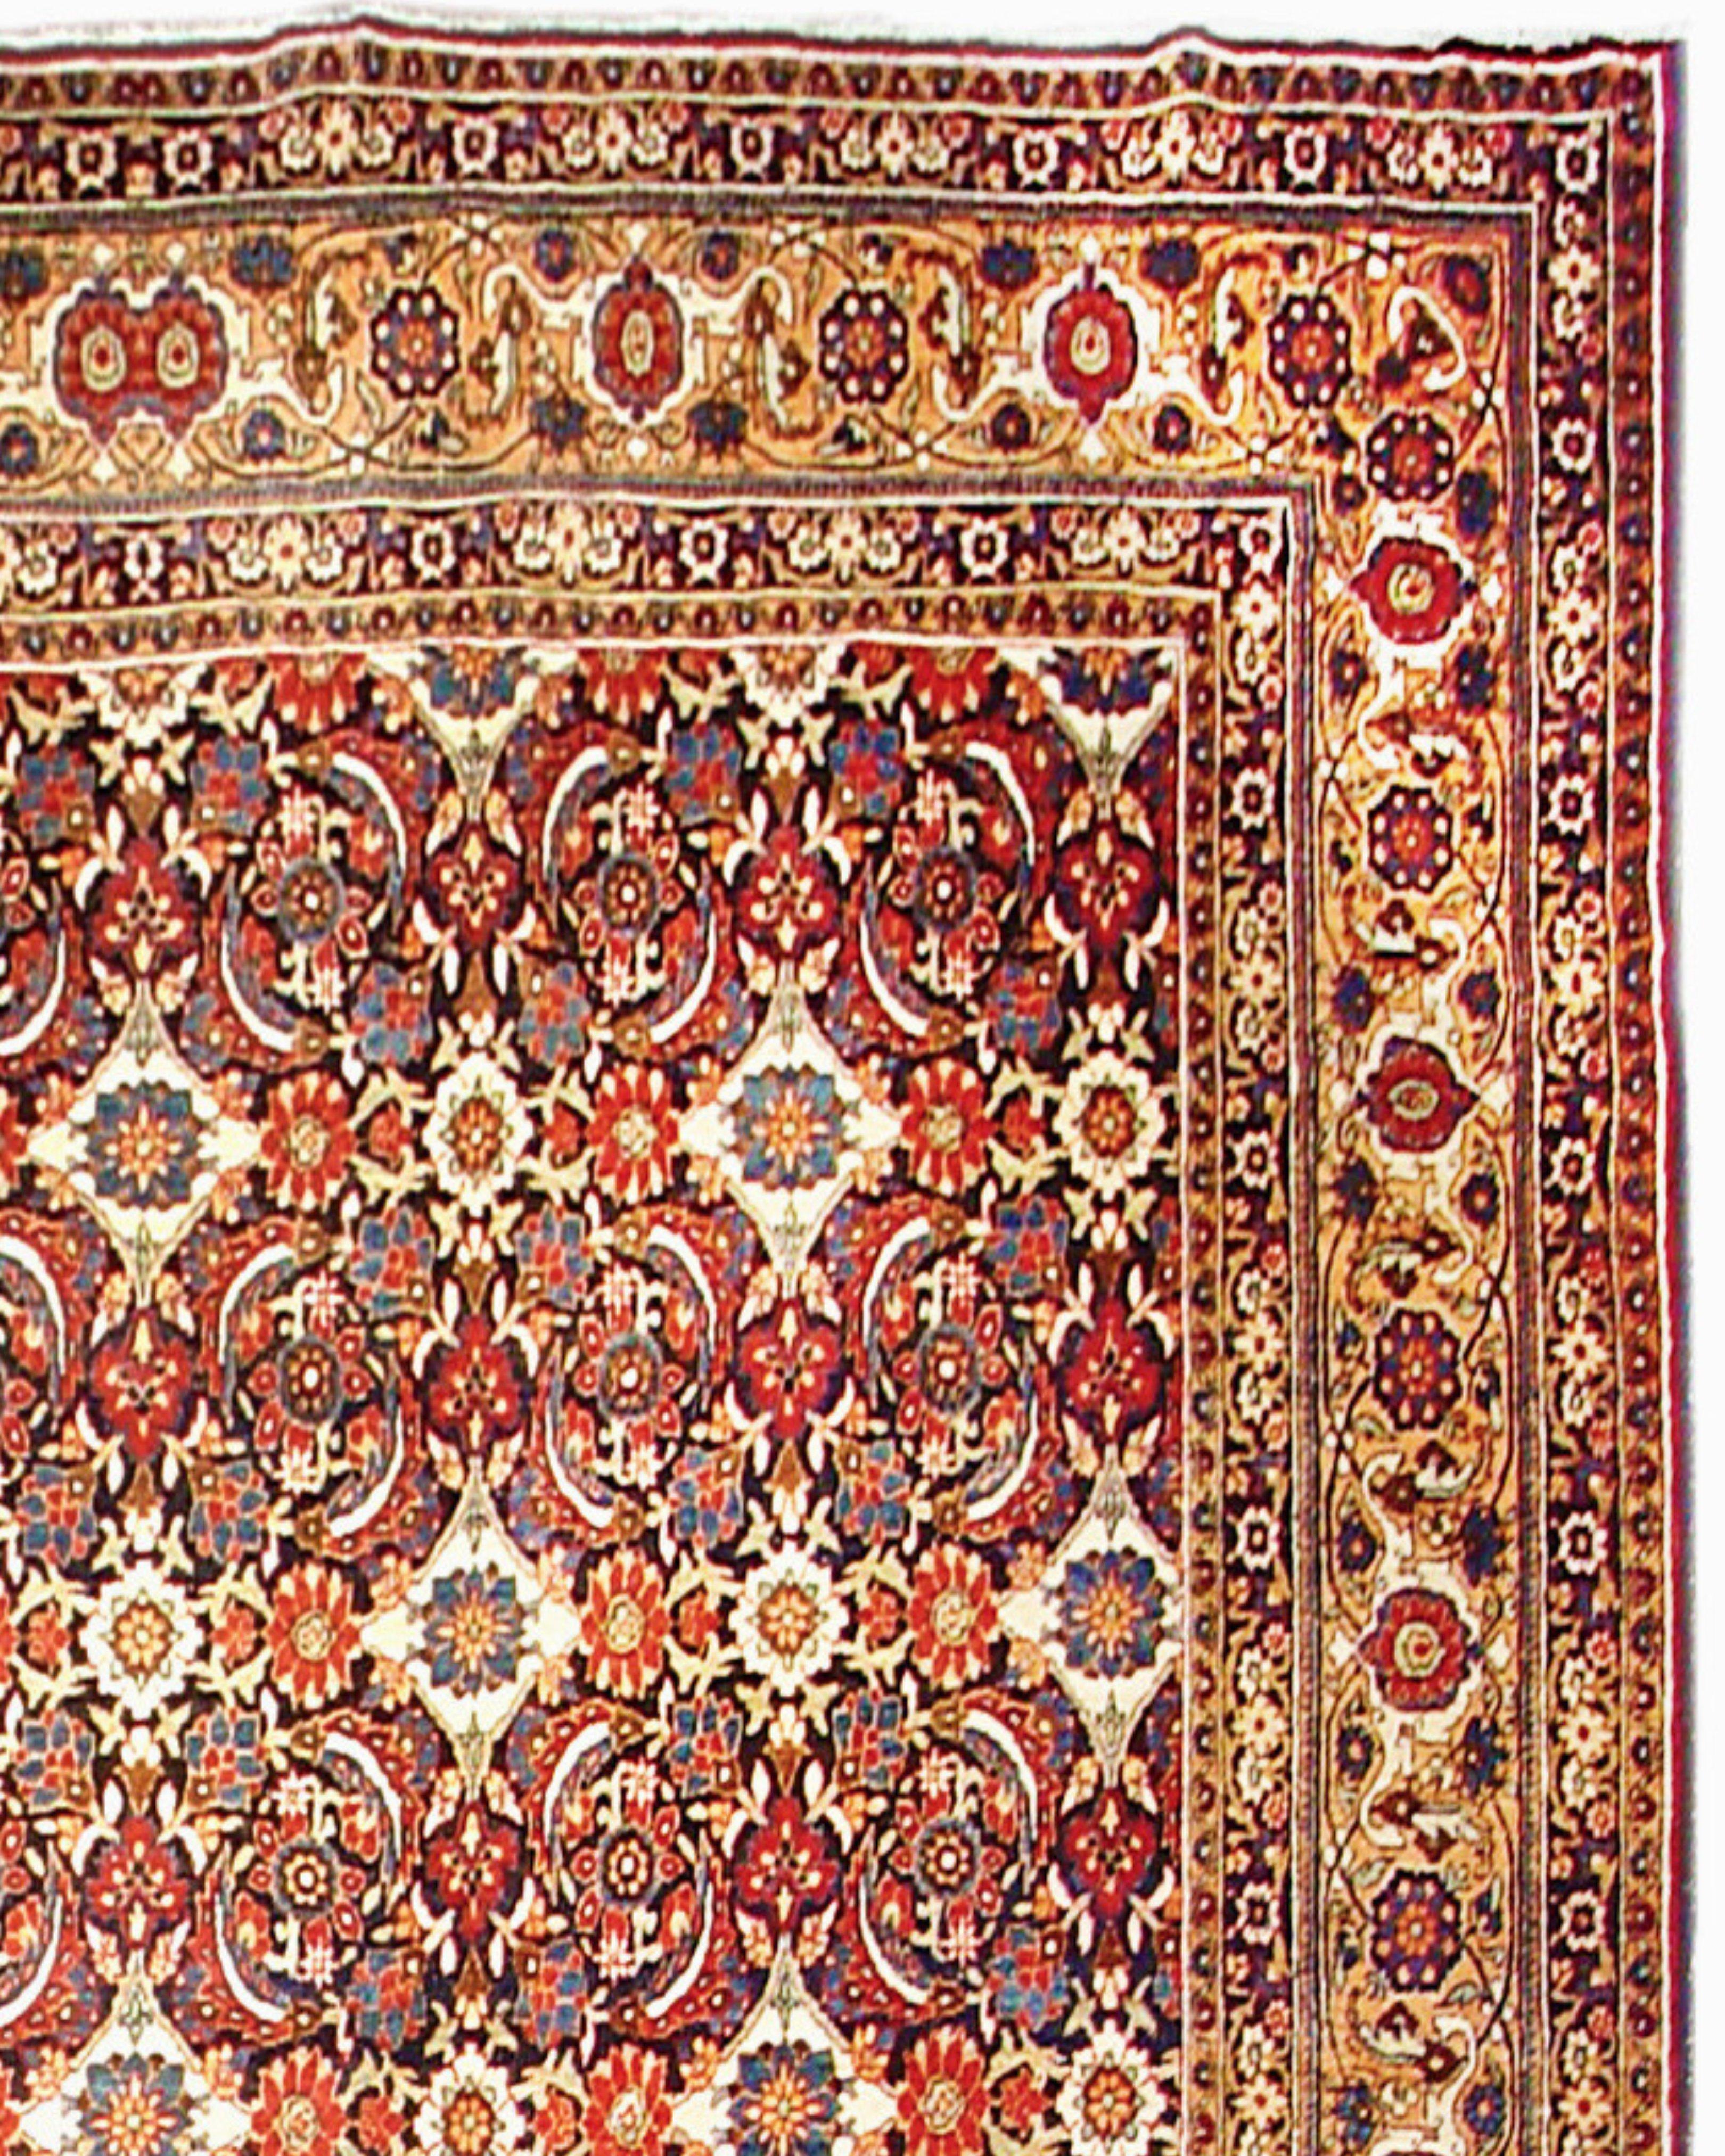 Antique Large Persian Yezd Carpet, c. 1900

Additional Information:
Dimensions: 10'1